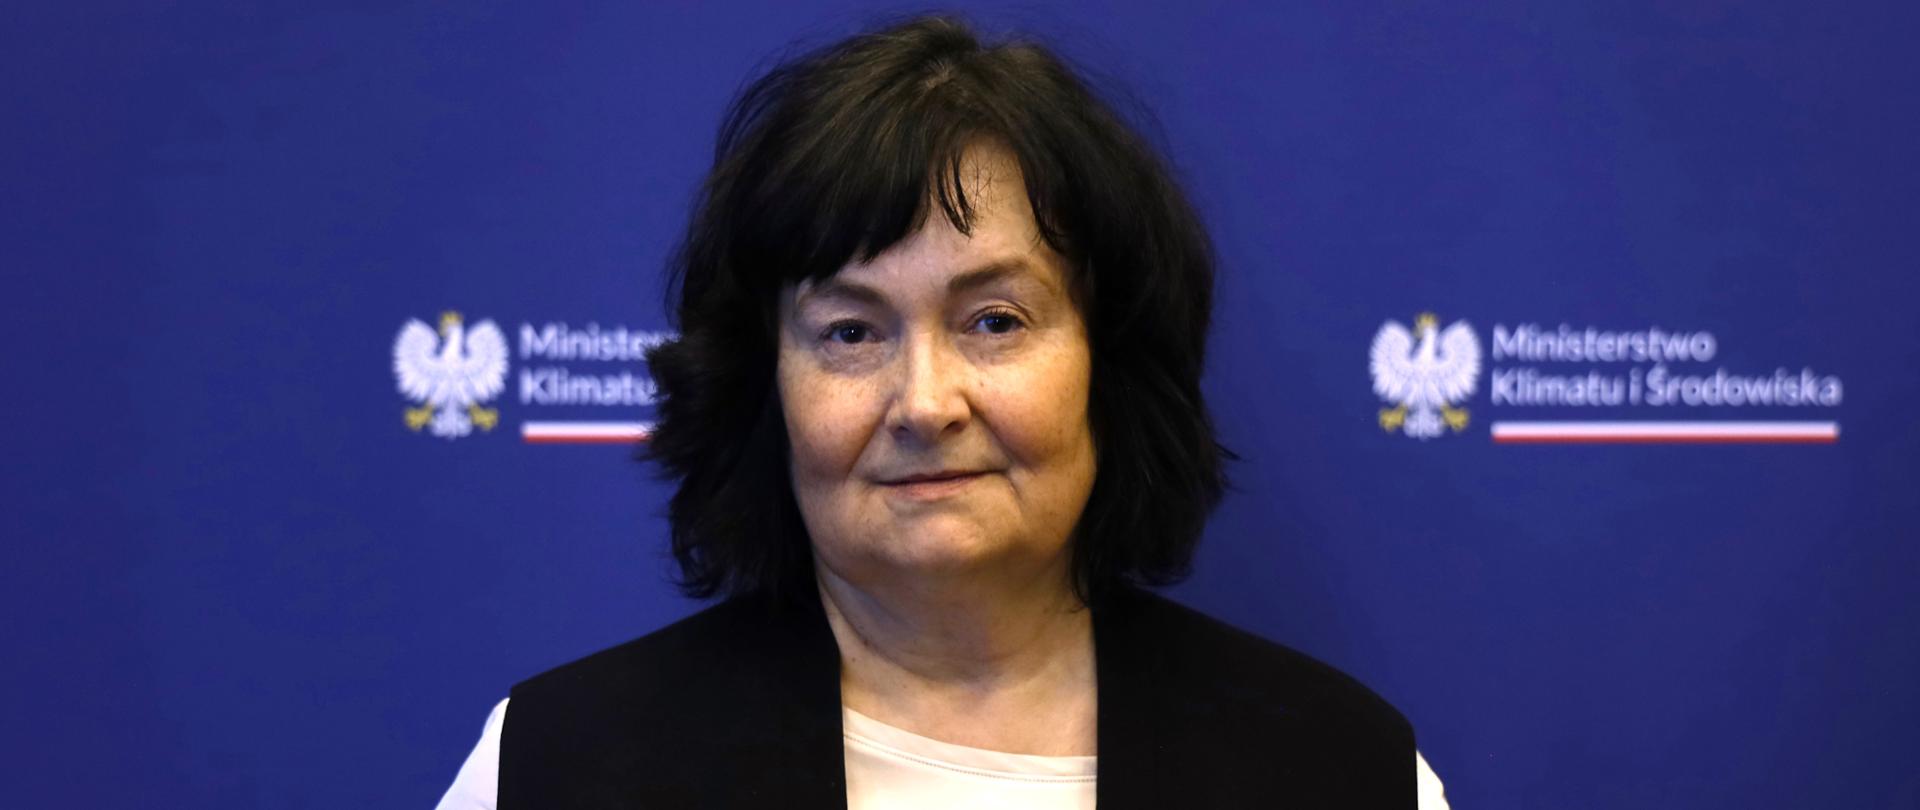 Beata Sielewicz